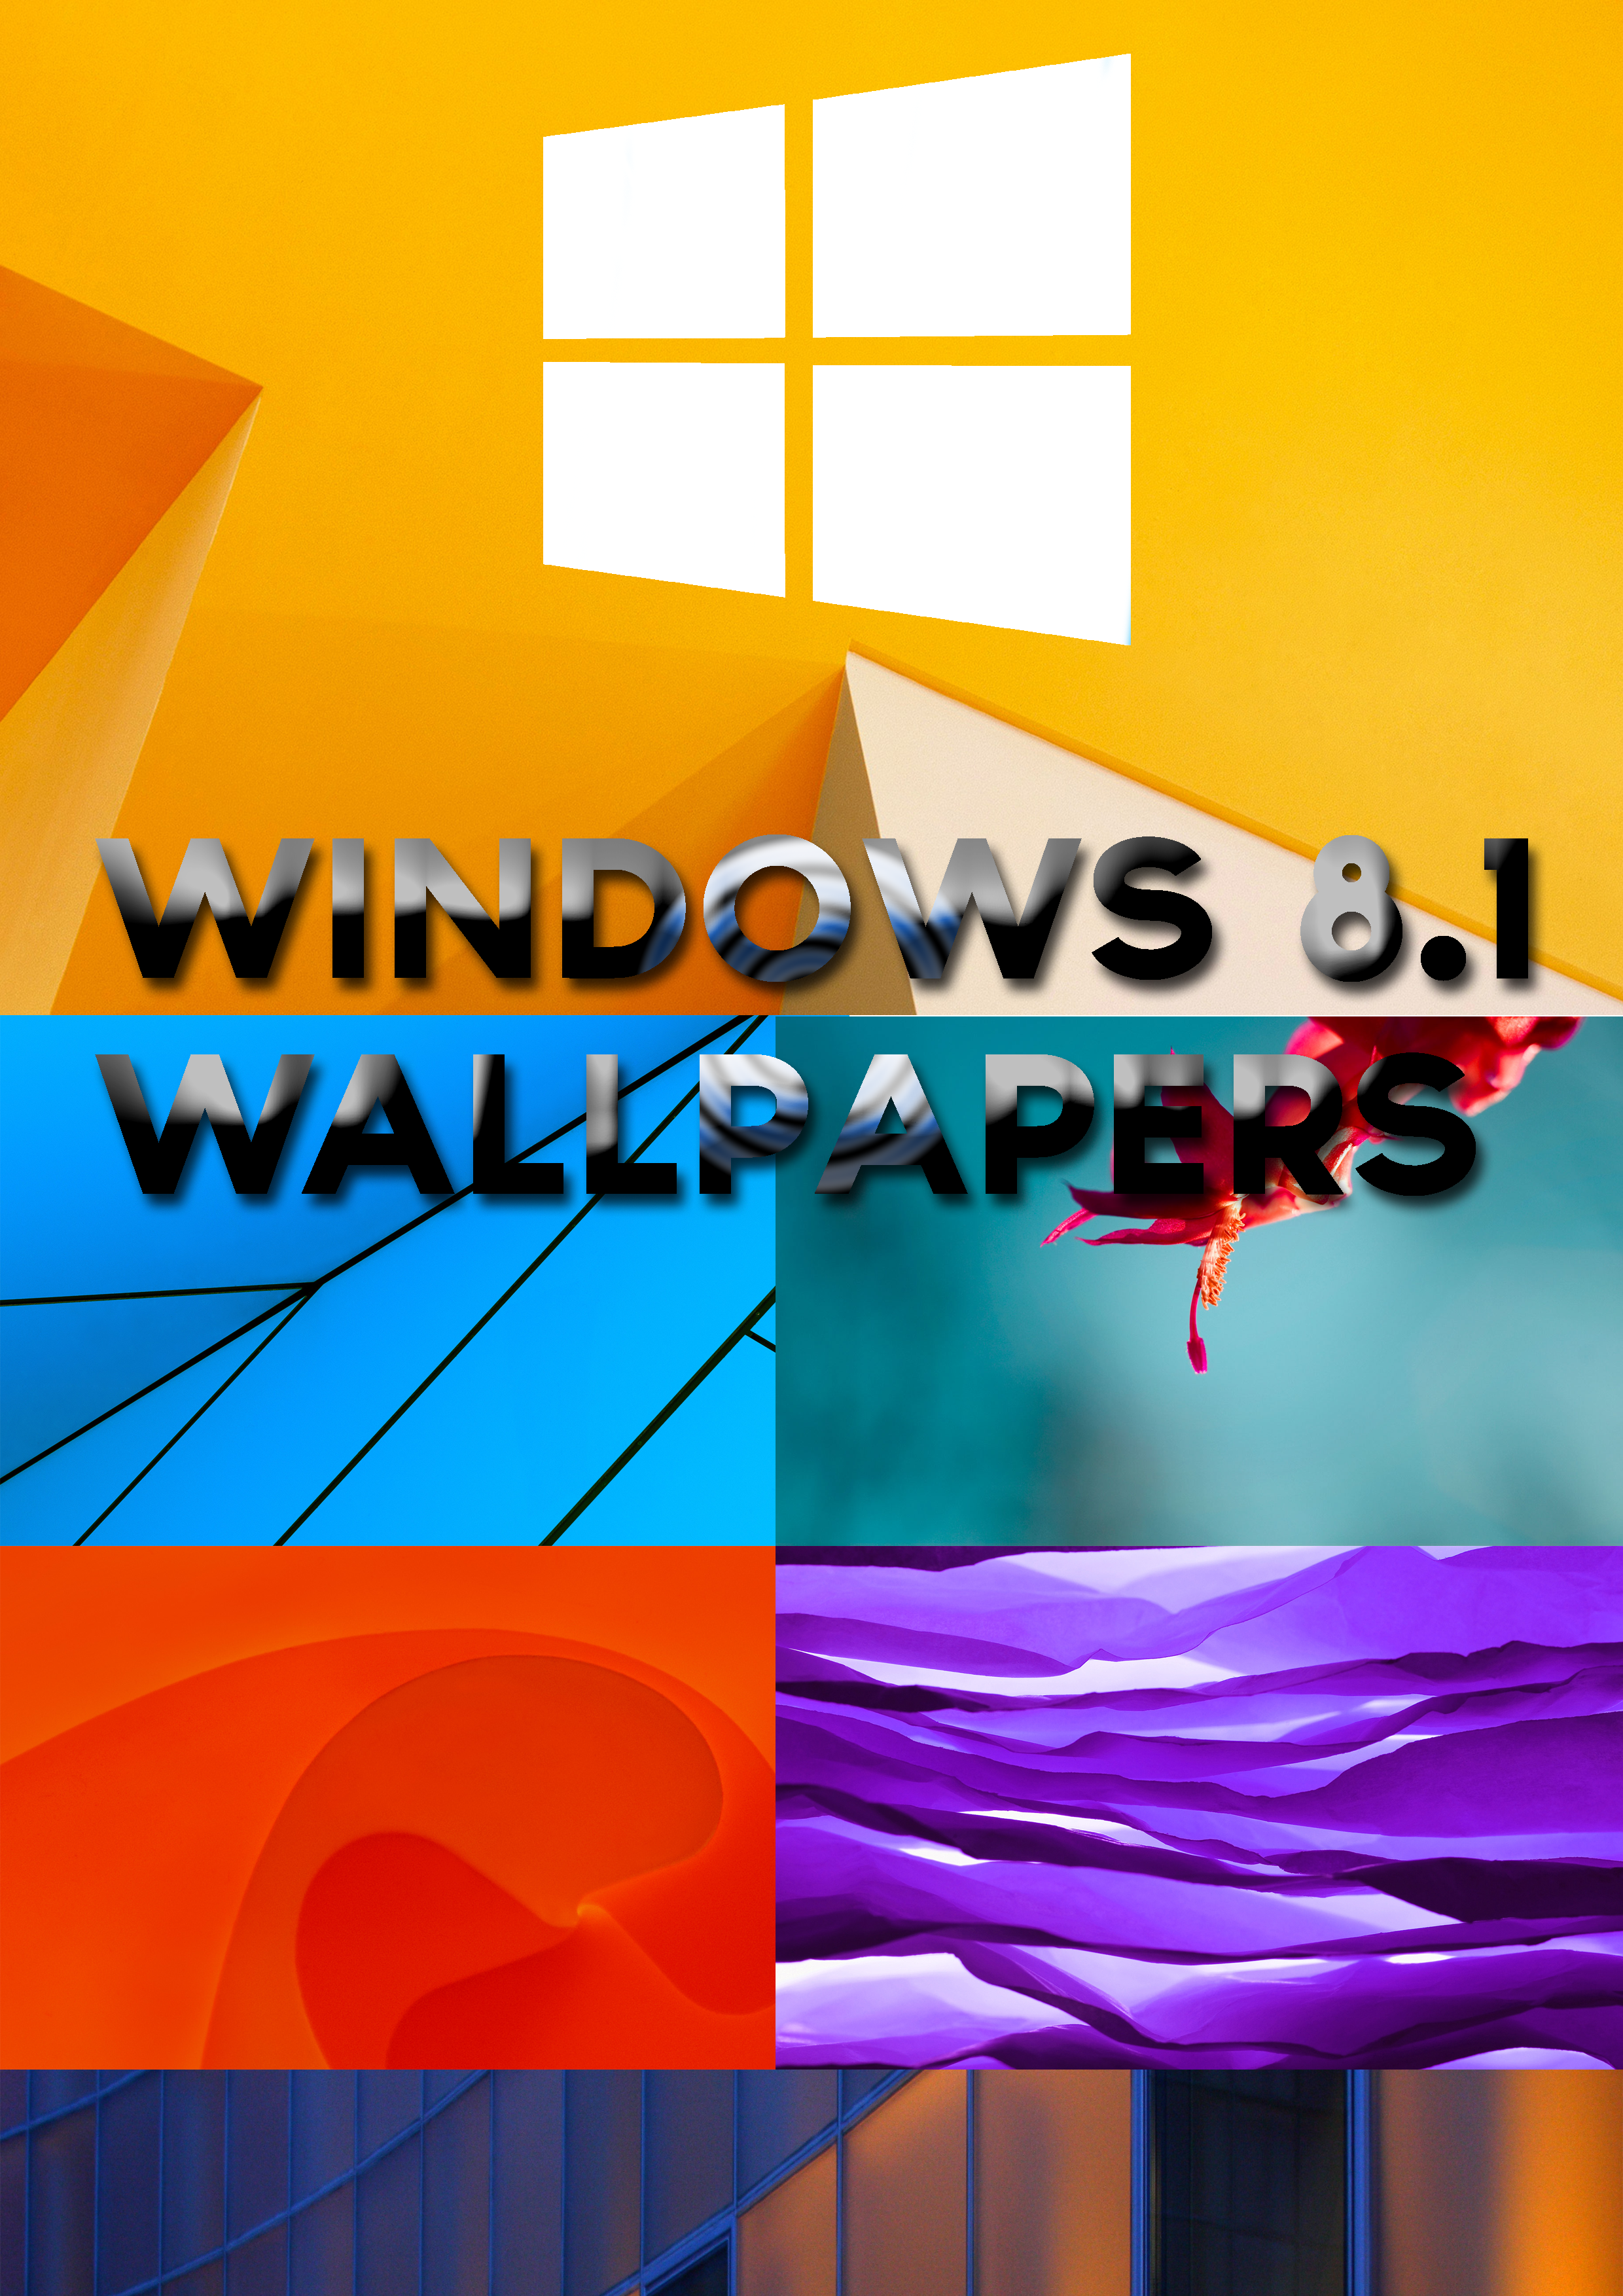 Free download windows 8 1 wallpaper pack by hesh1222 on deviantart